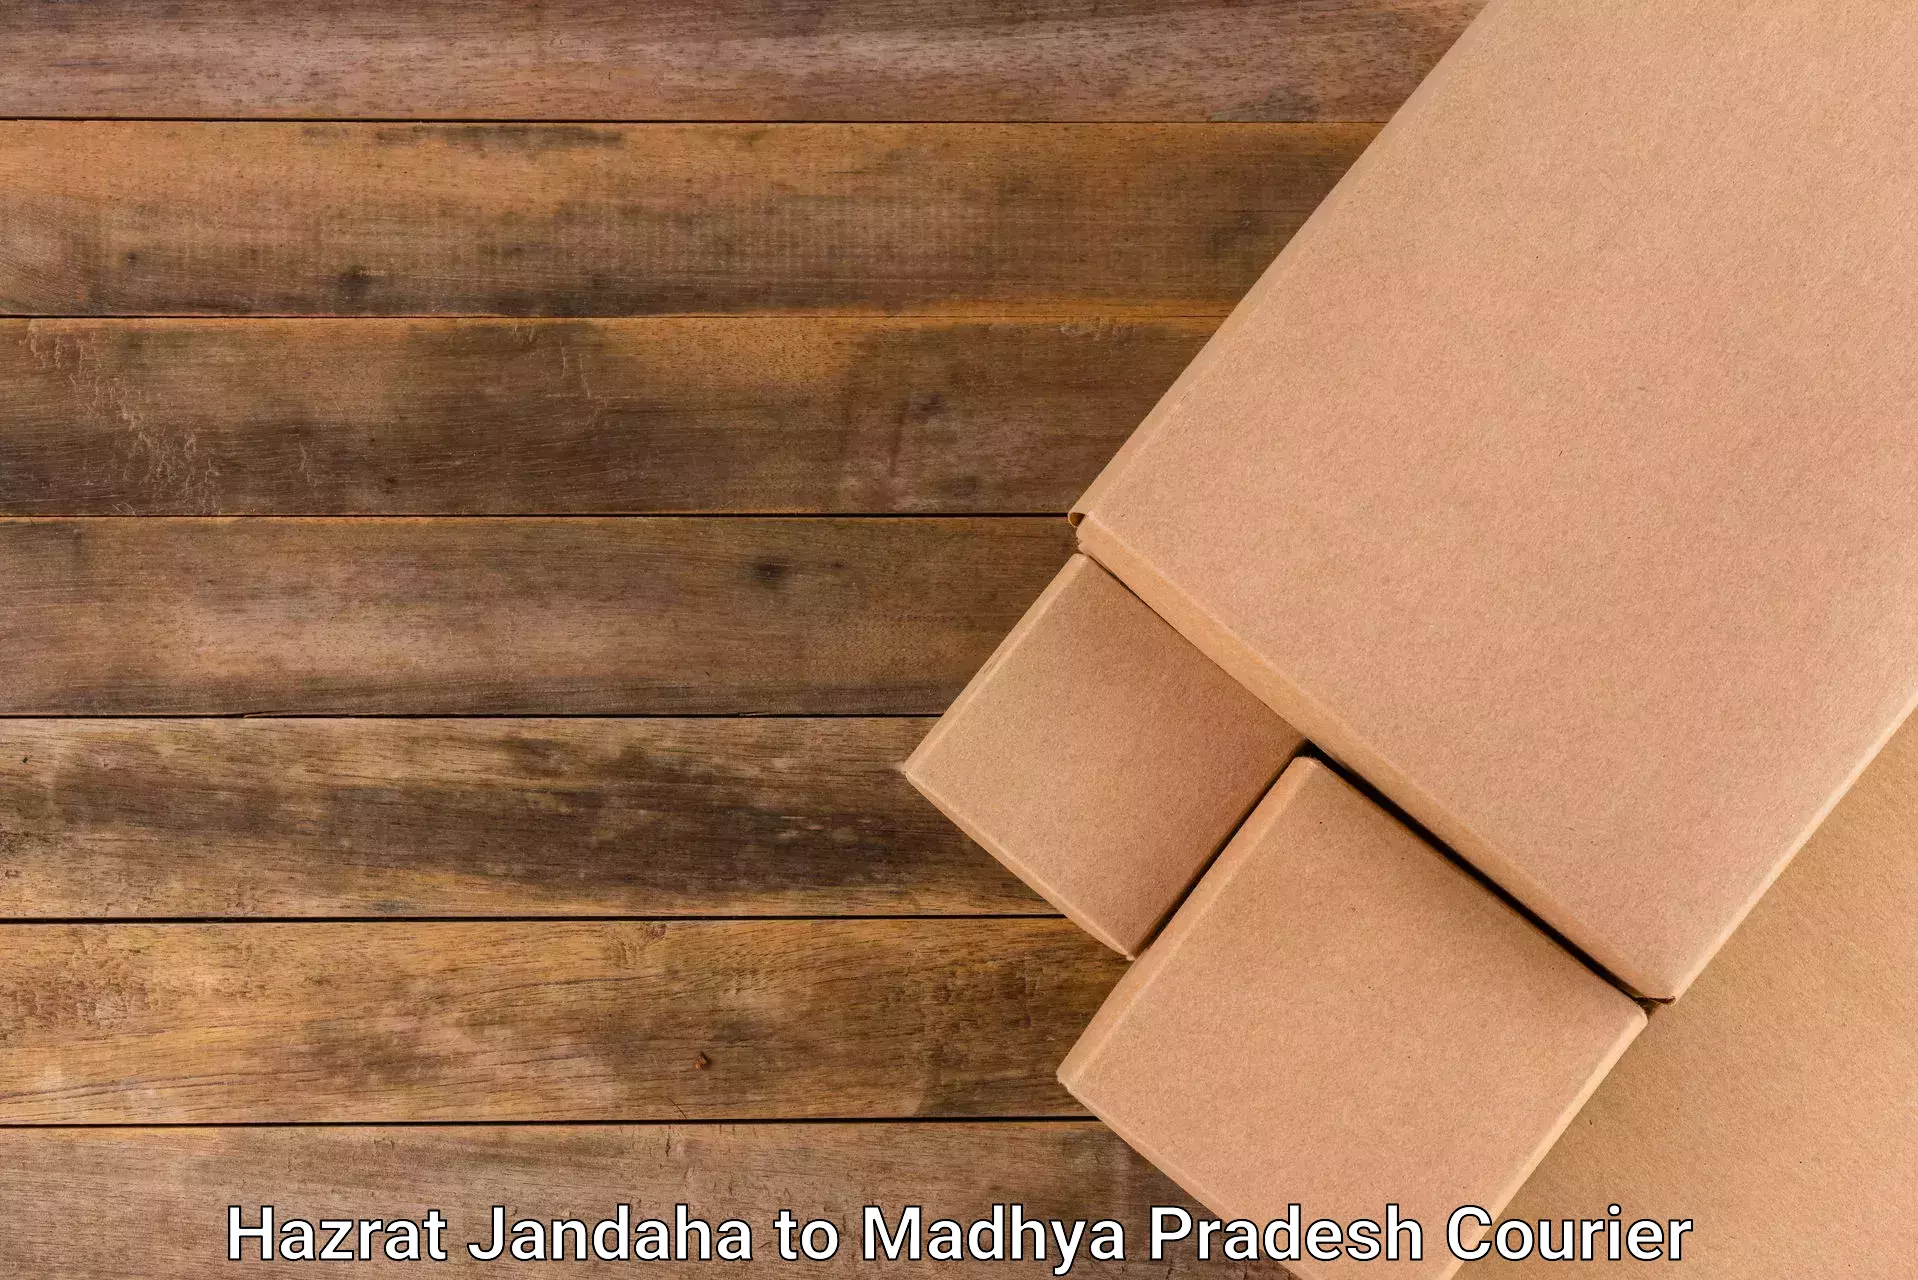 Sustainable delivery practices Hazrat Jandaha to Madhya Pradesh